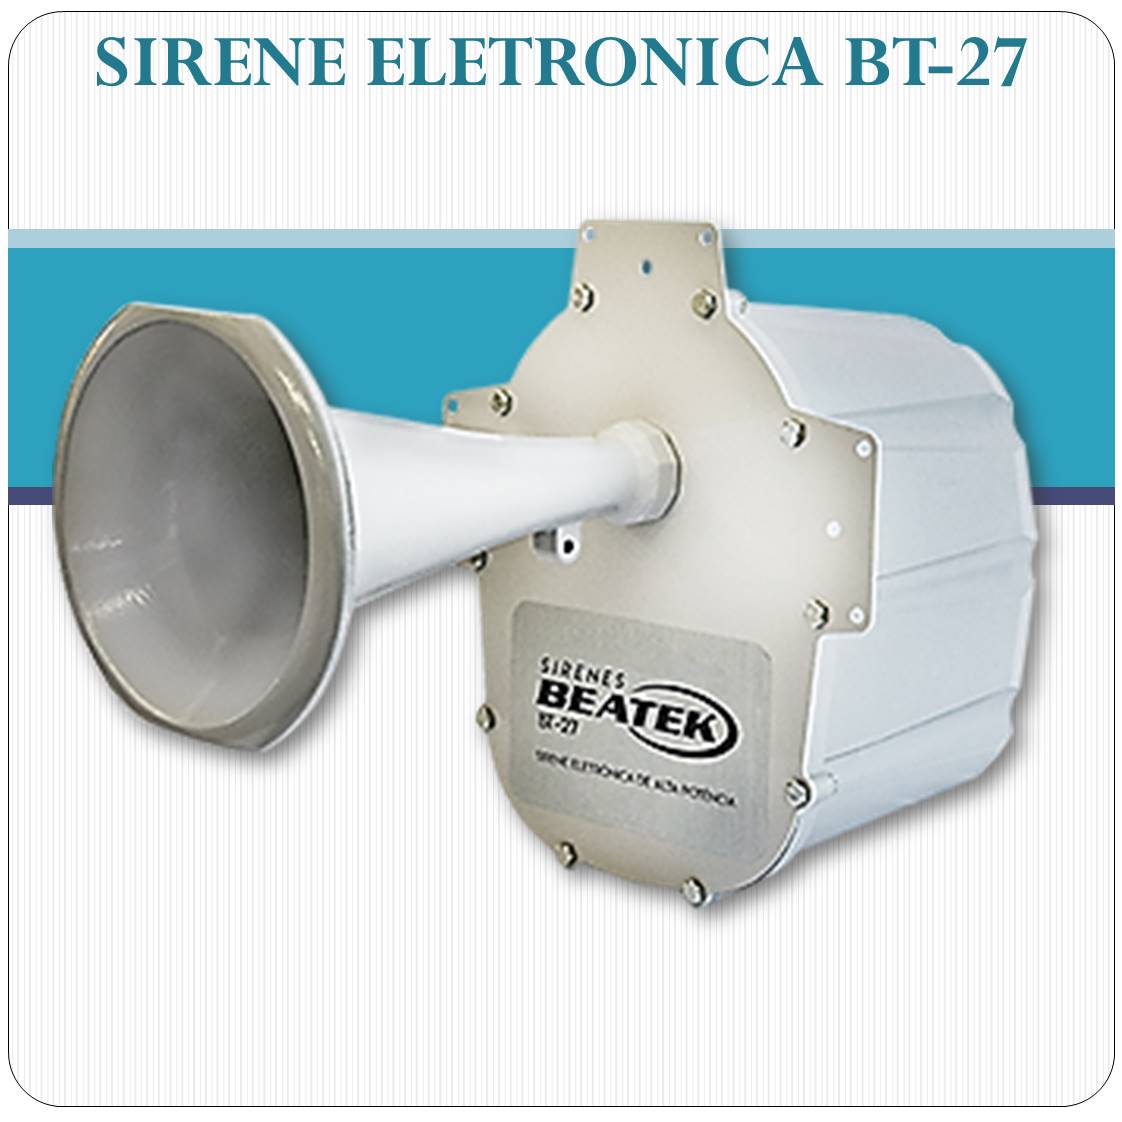 Sirene Eletrônica de Alta Potência BEATEK BT-27